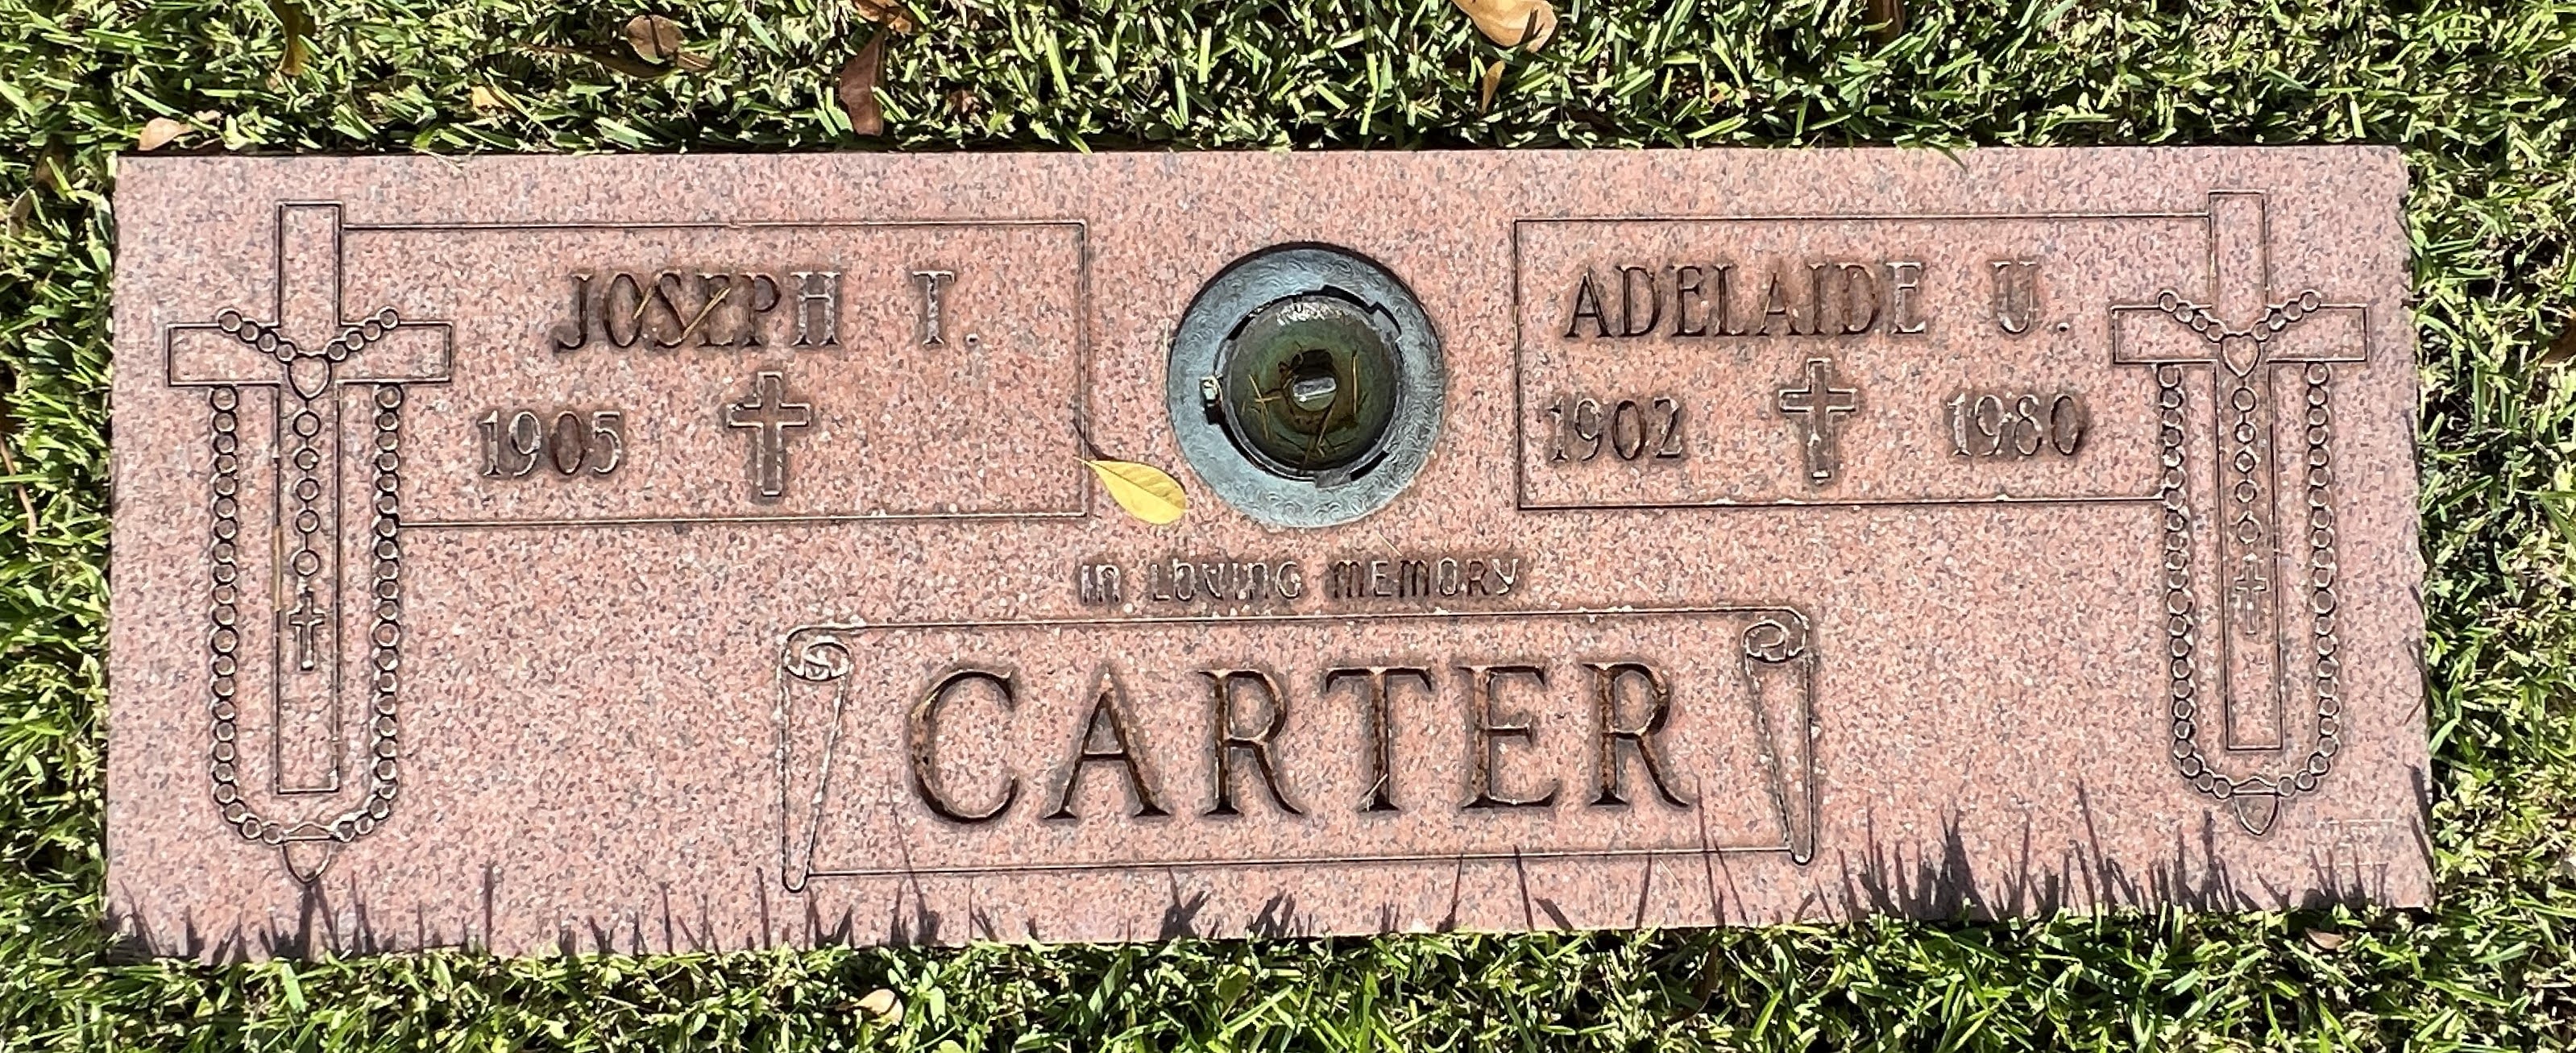 Adelaide U Carter